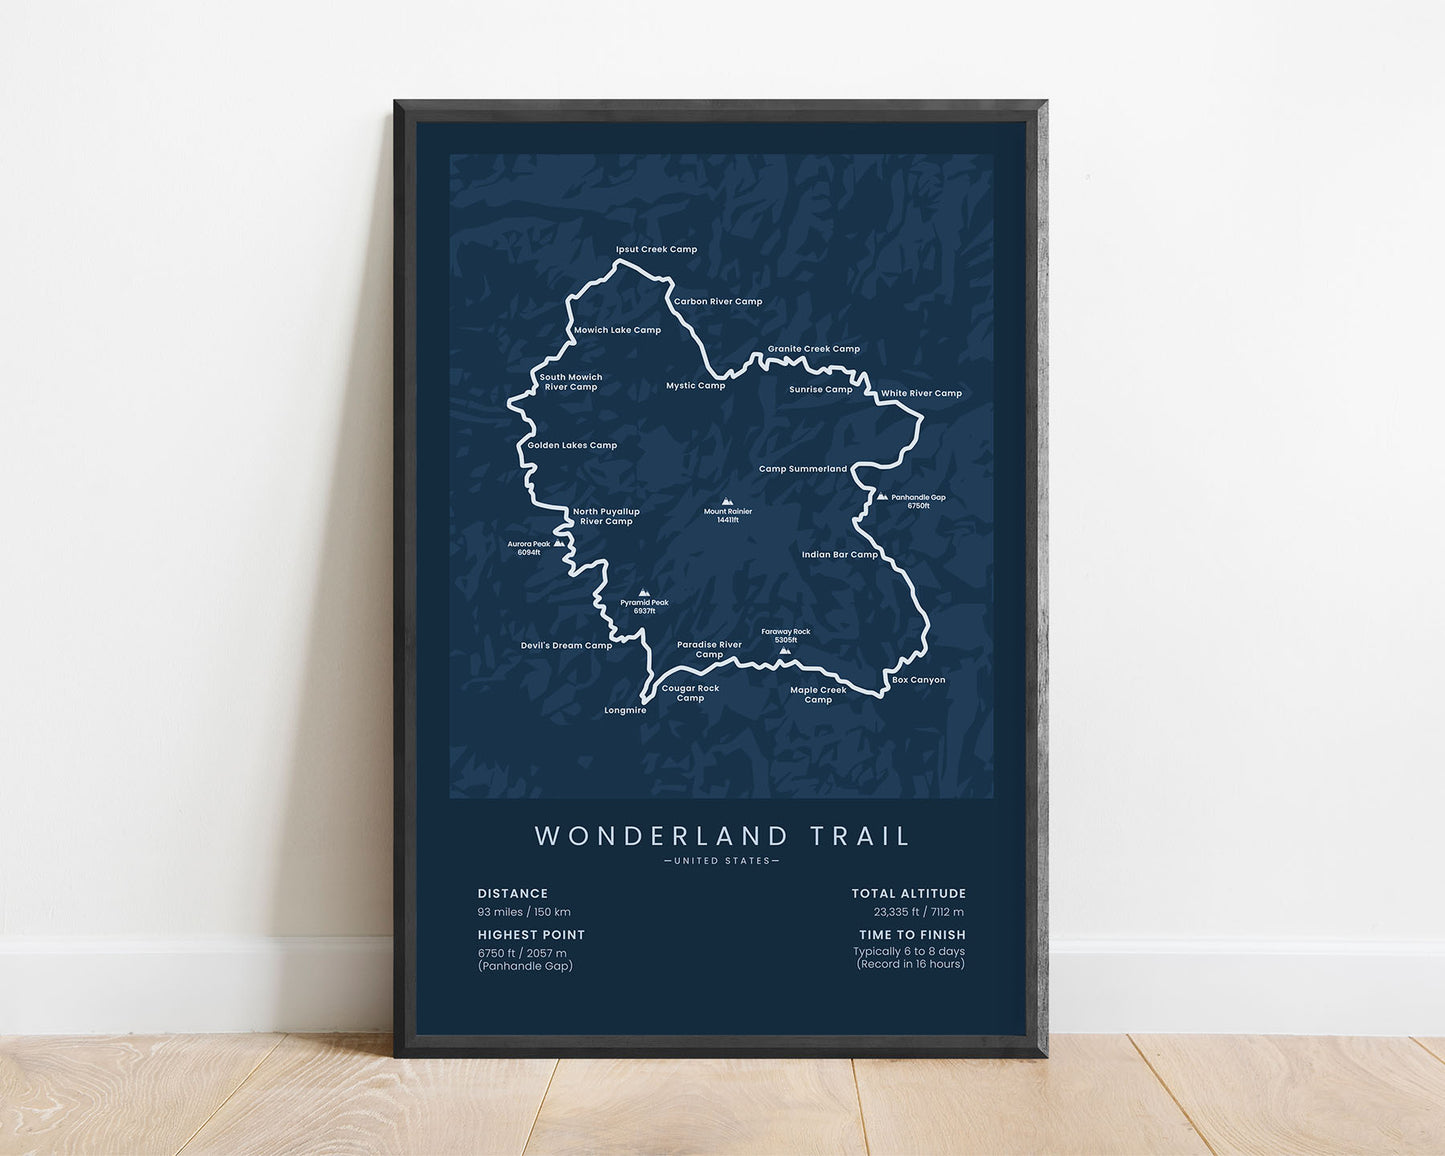 Wonderland Trail (Washington) path poster with blue background